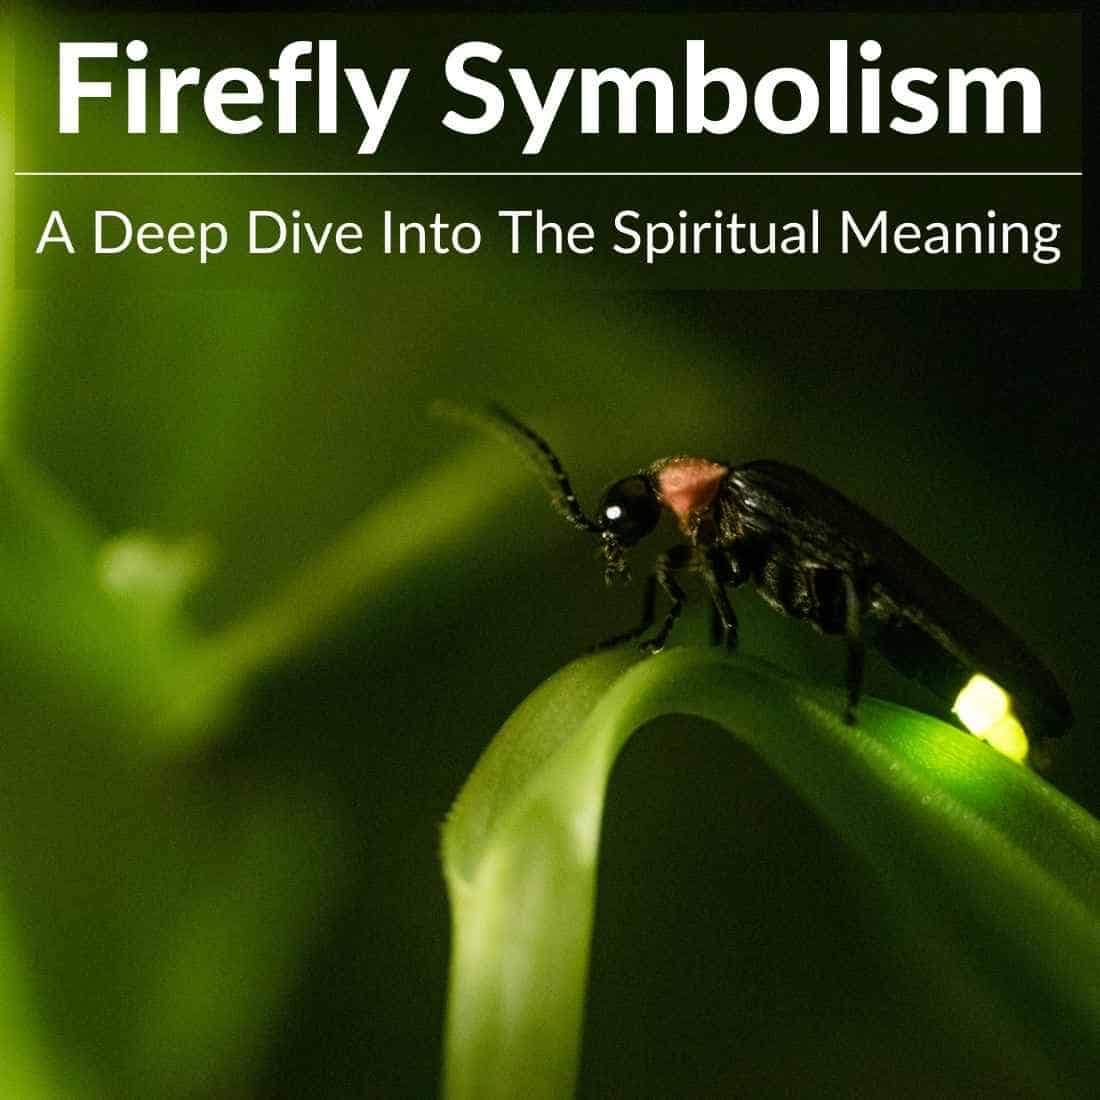 Firefly symbolism